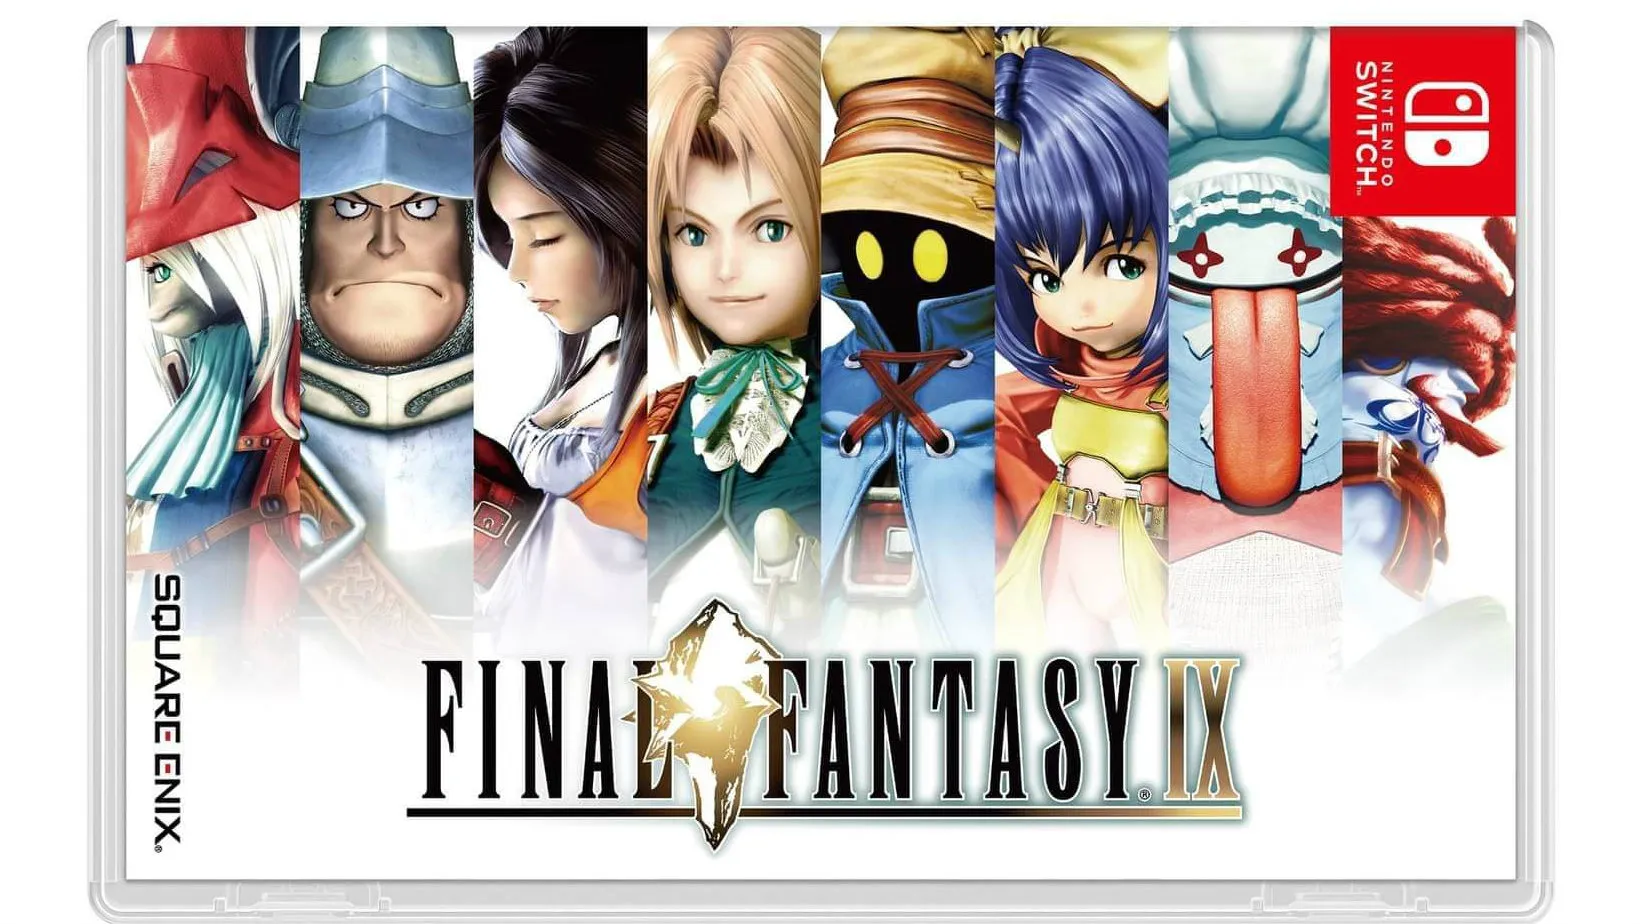 Effektiv bue Måne Final Fantasy IX Switch Physical Copies Heading to Asia - Siliconera